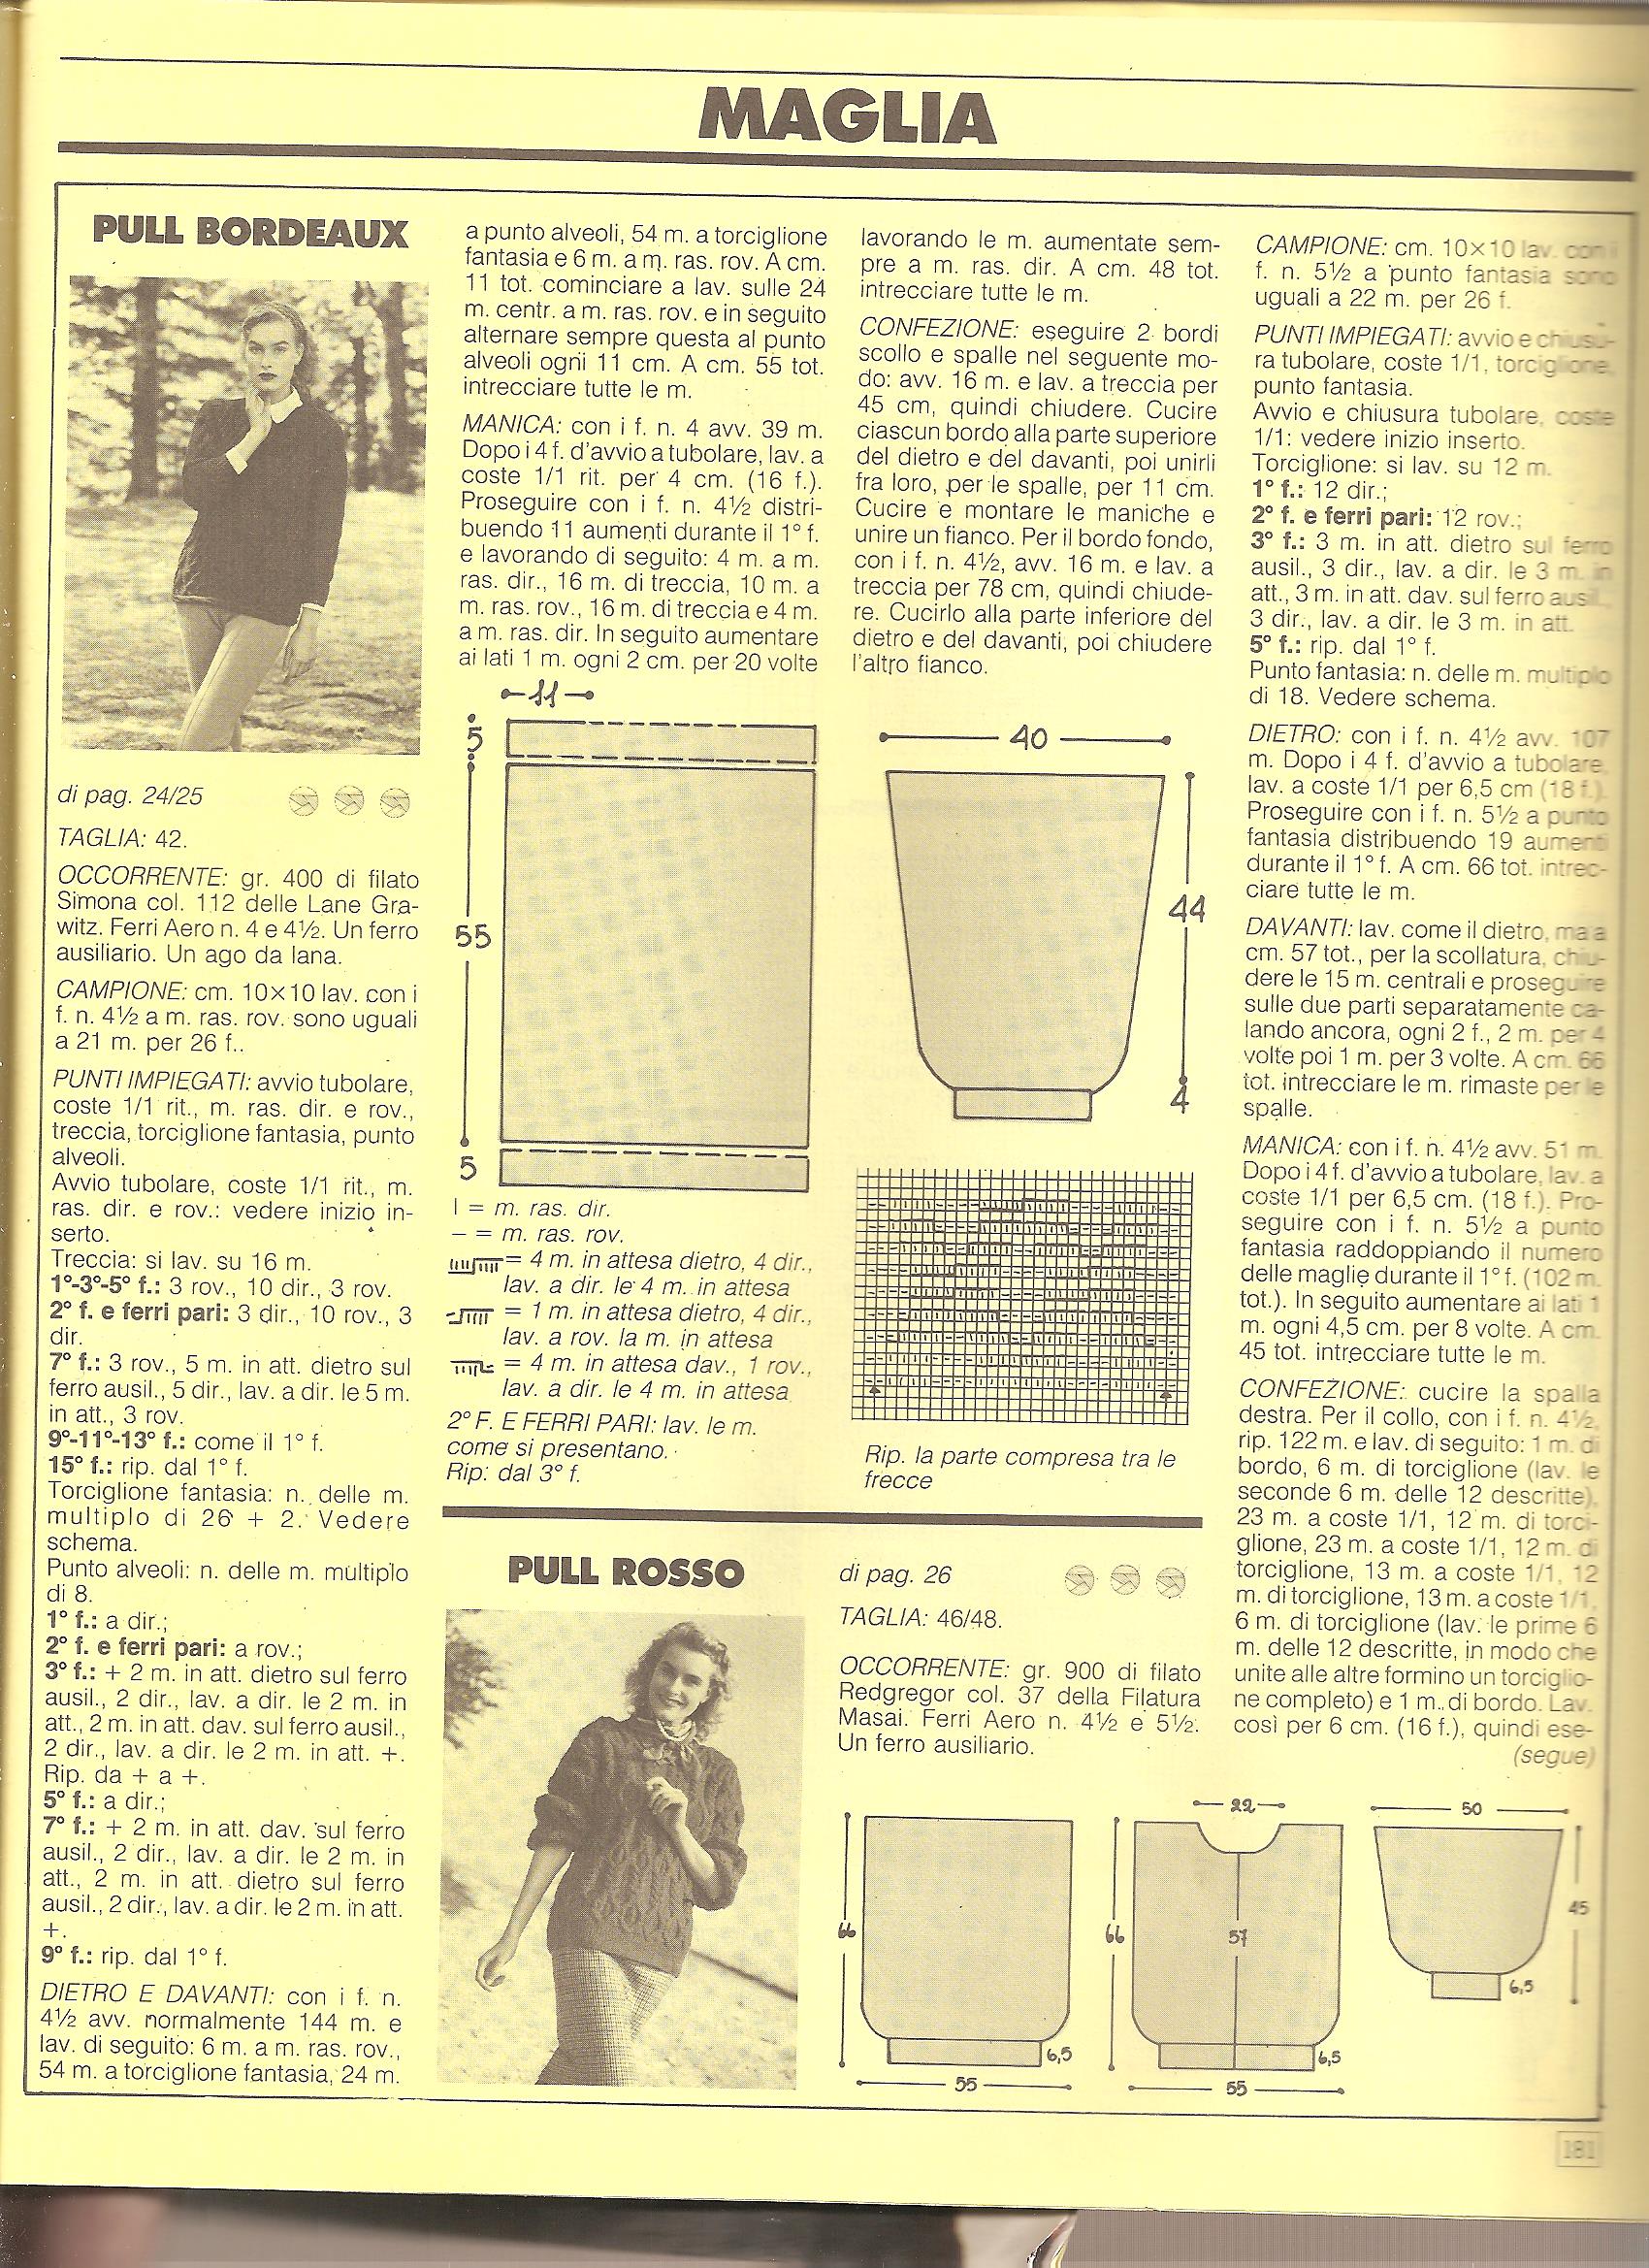 Pull bordeaux knitting pattern(4)